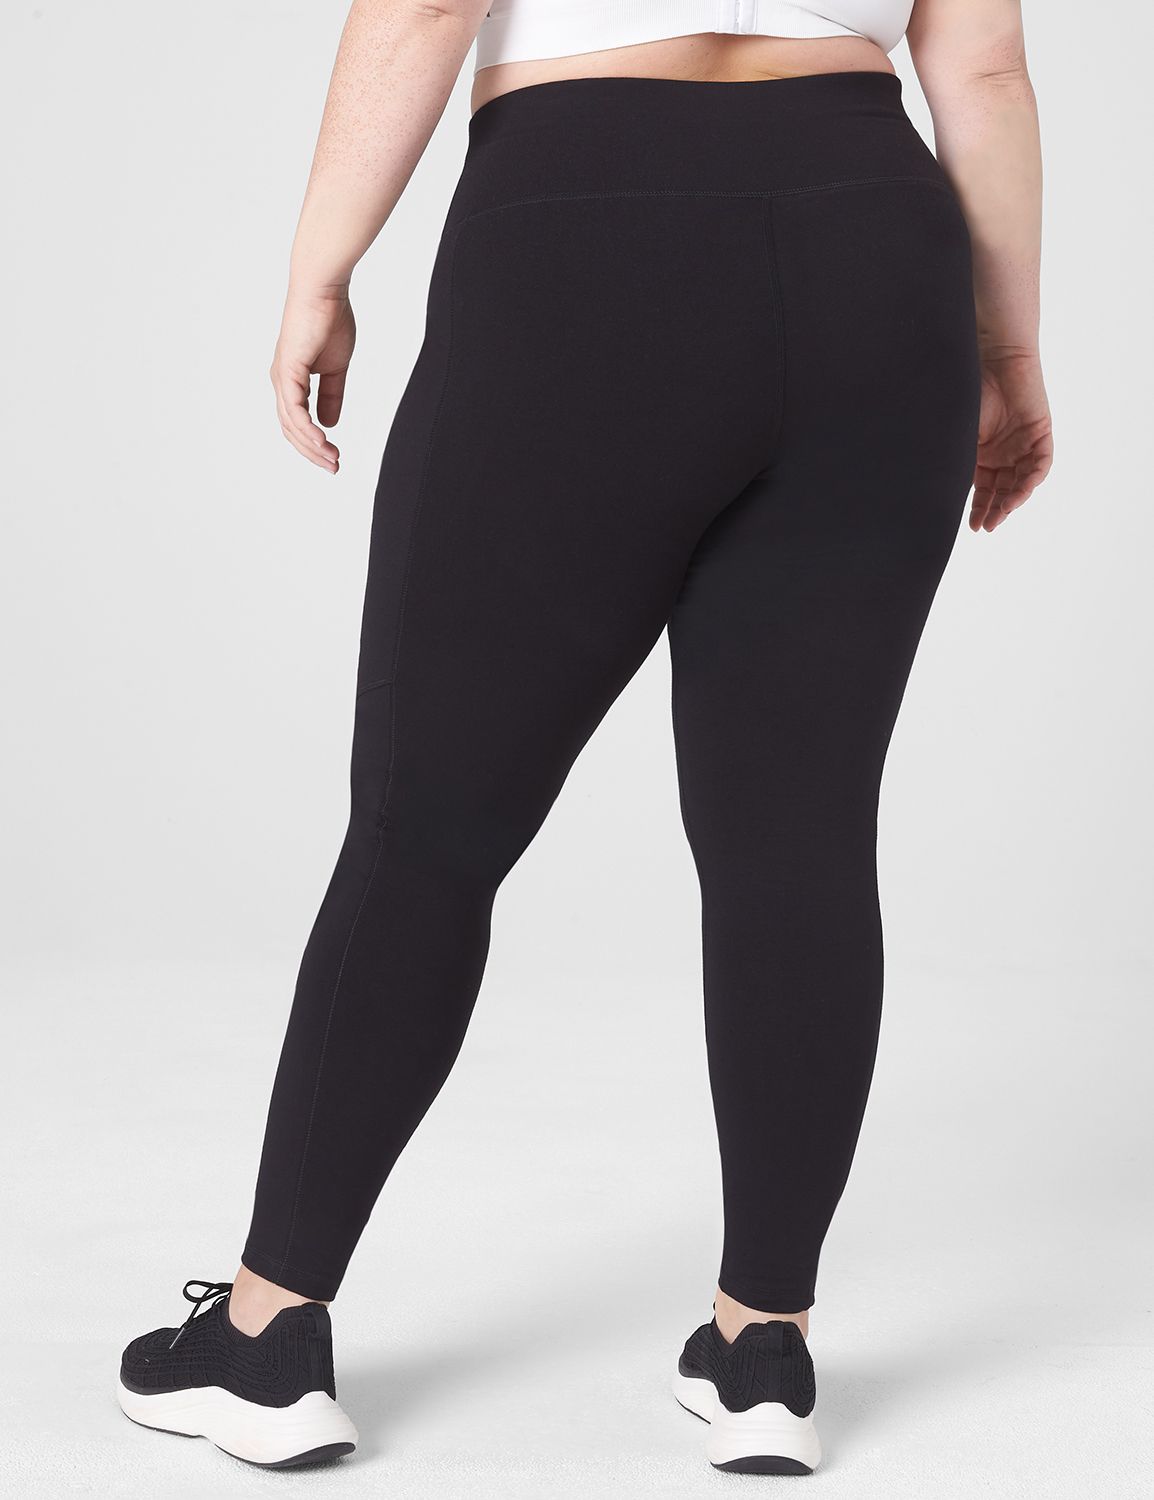 Spanx Tummy Control High-Waisted Shorts, Black, Large, 2125